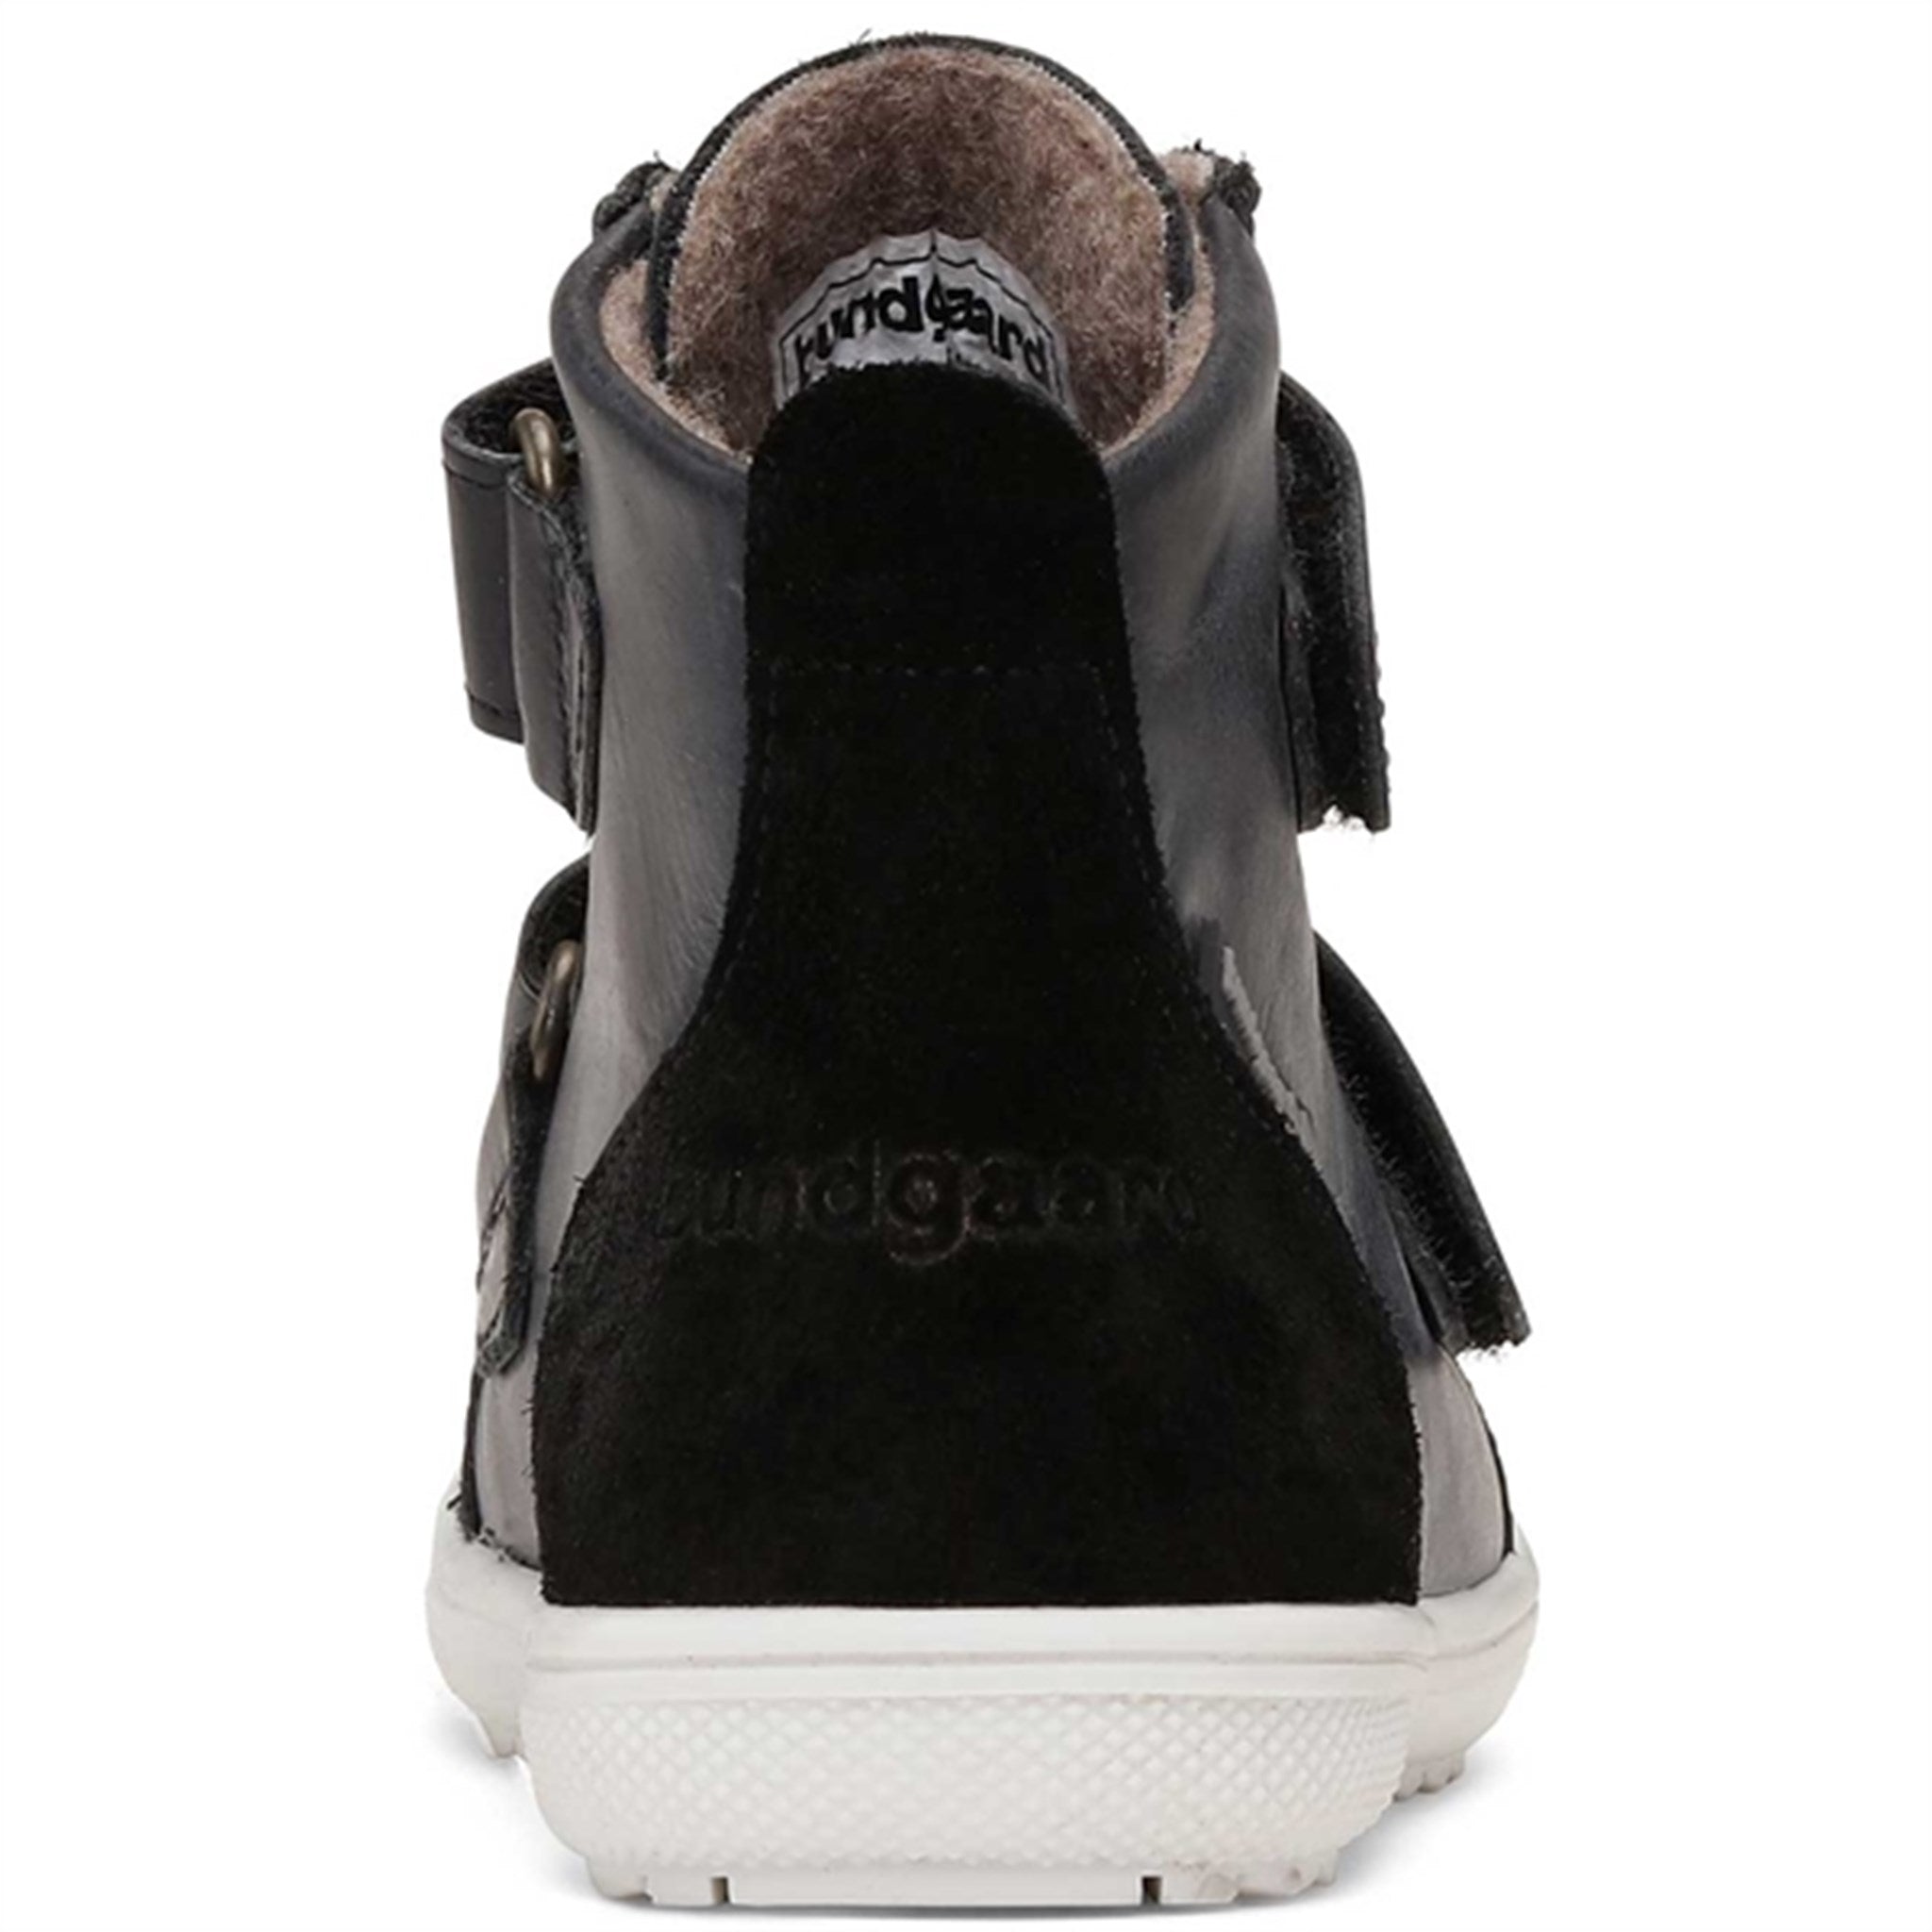 Bundgaard Storm Velcro Tex Shoes Black 5